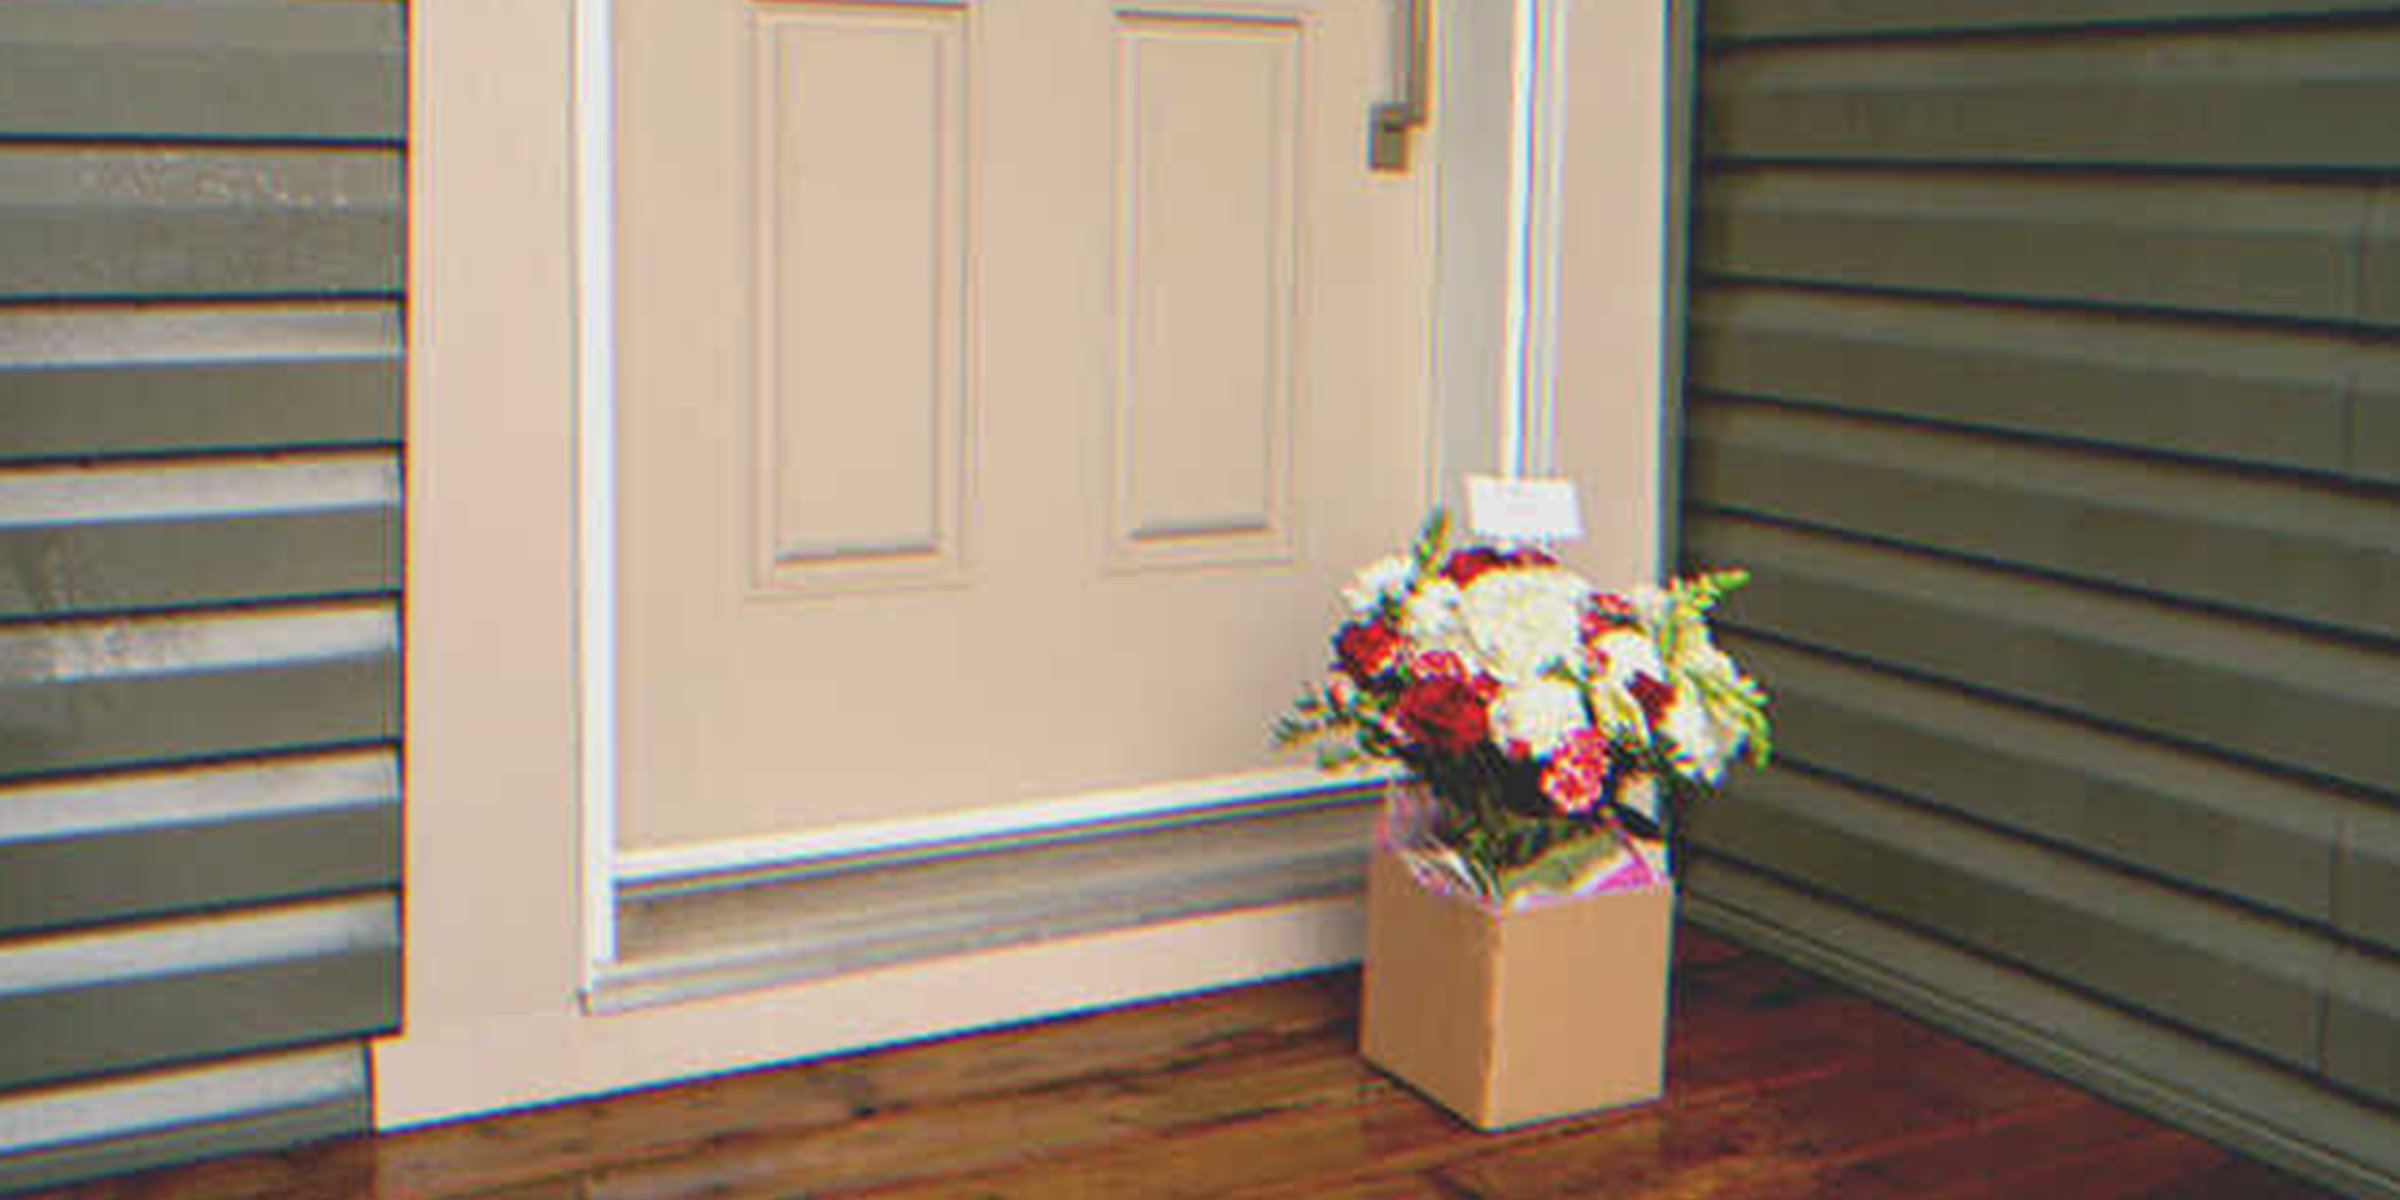 Flores frente a una puerta. | Foto: Shutterstock 